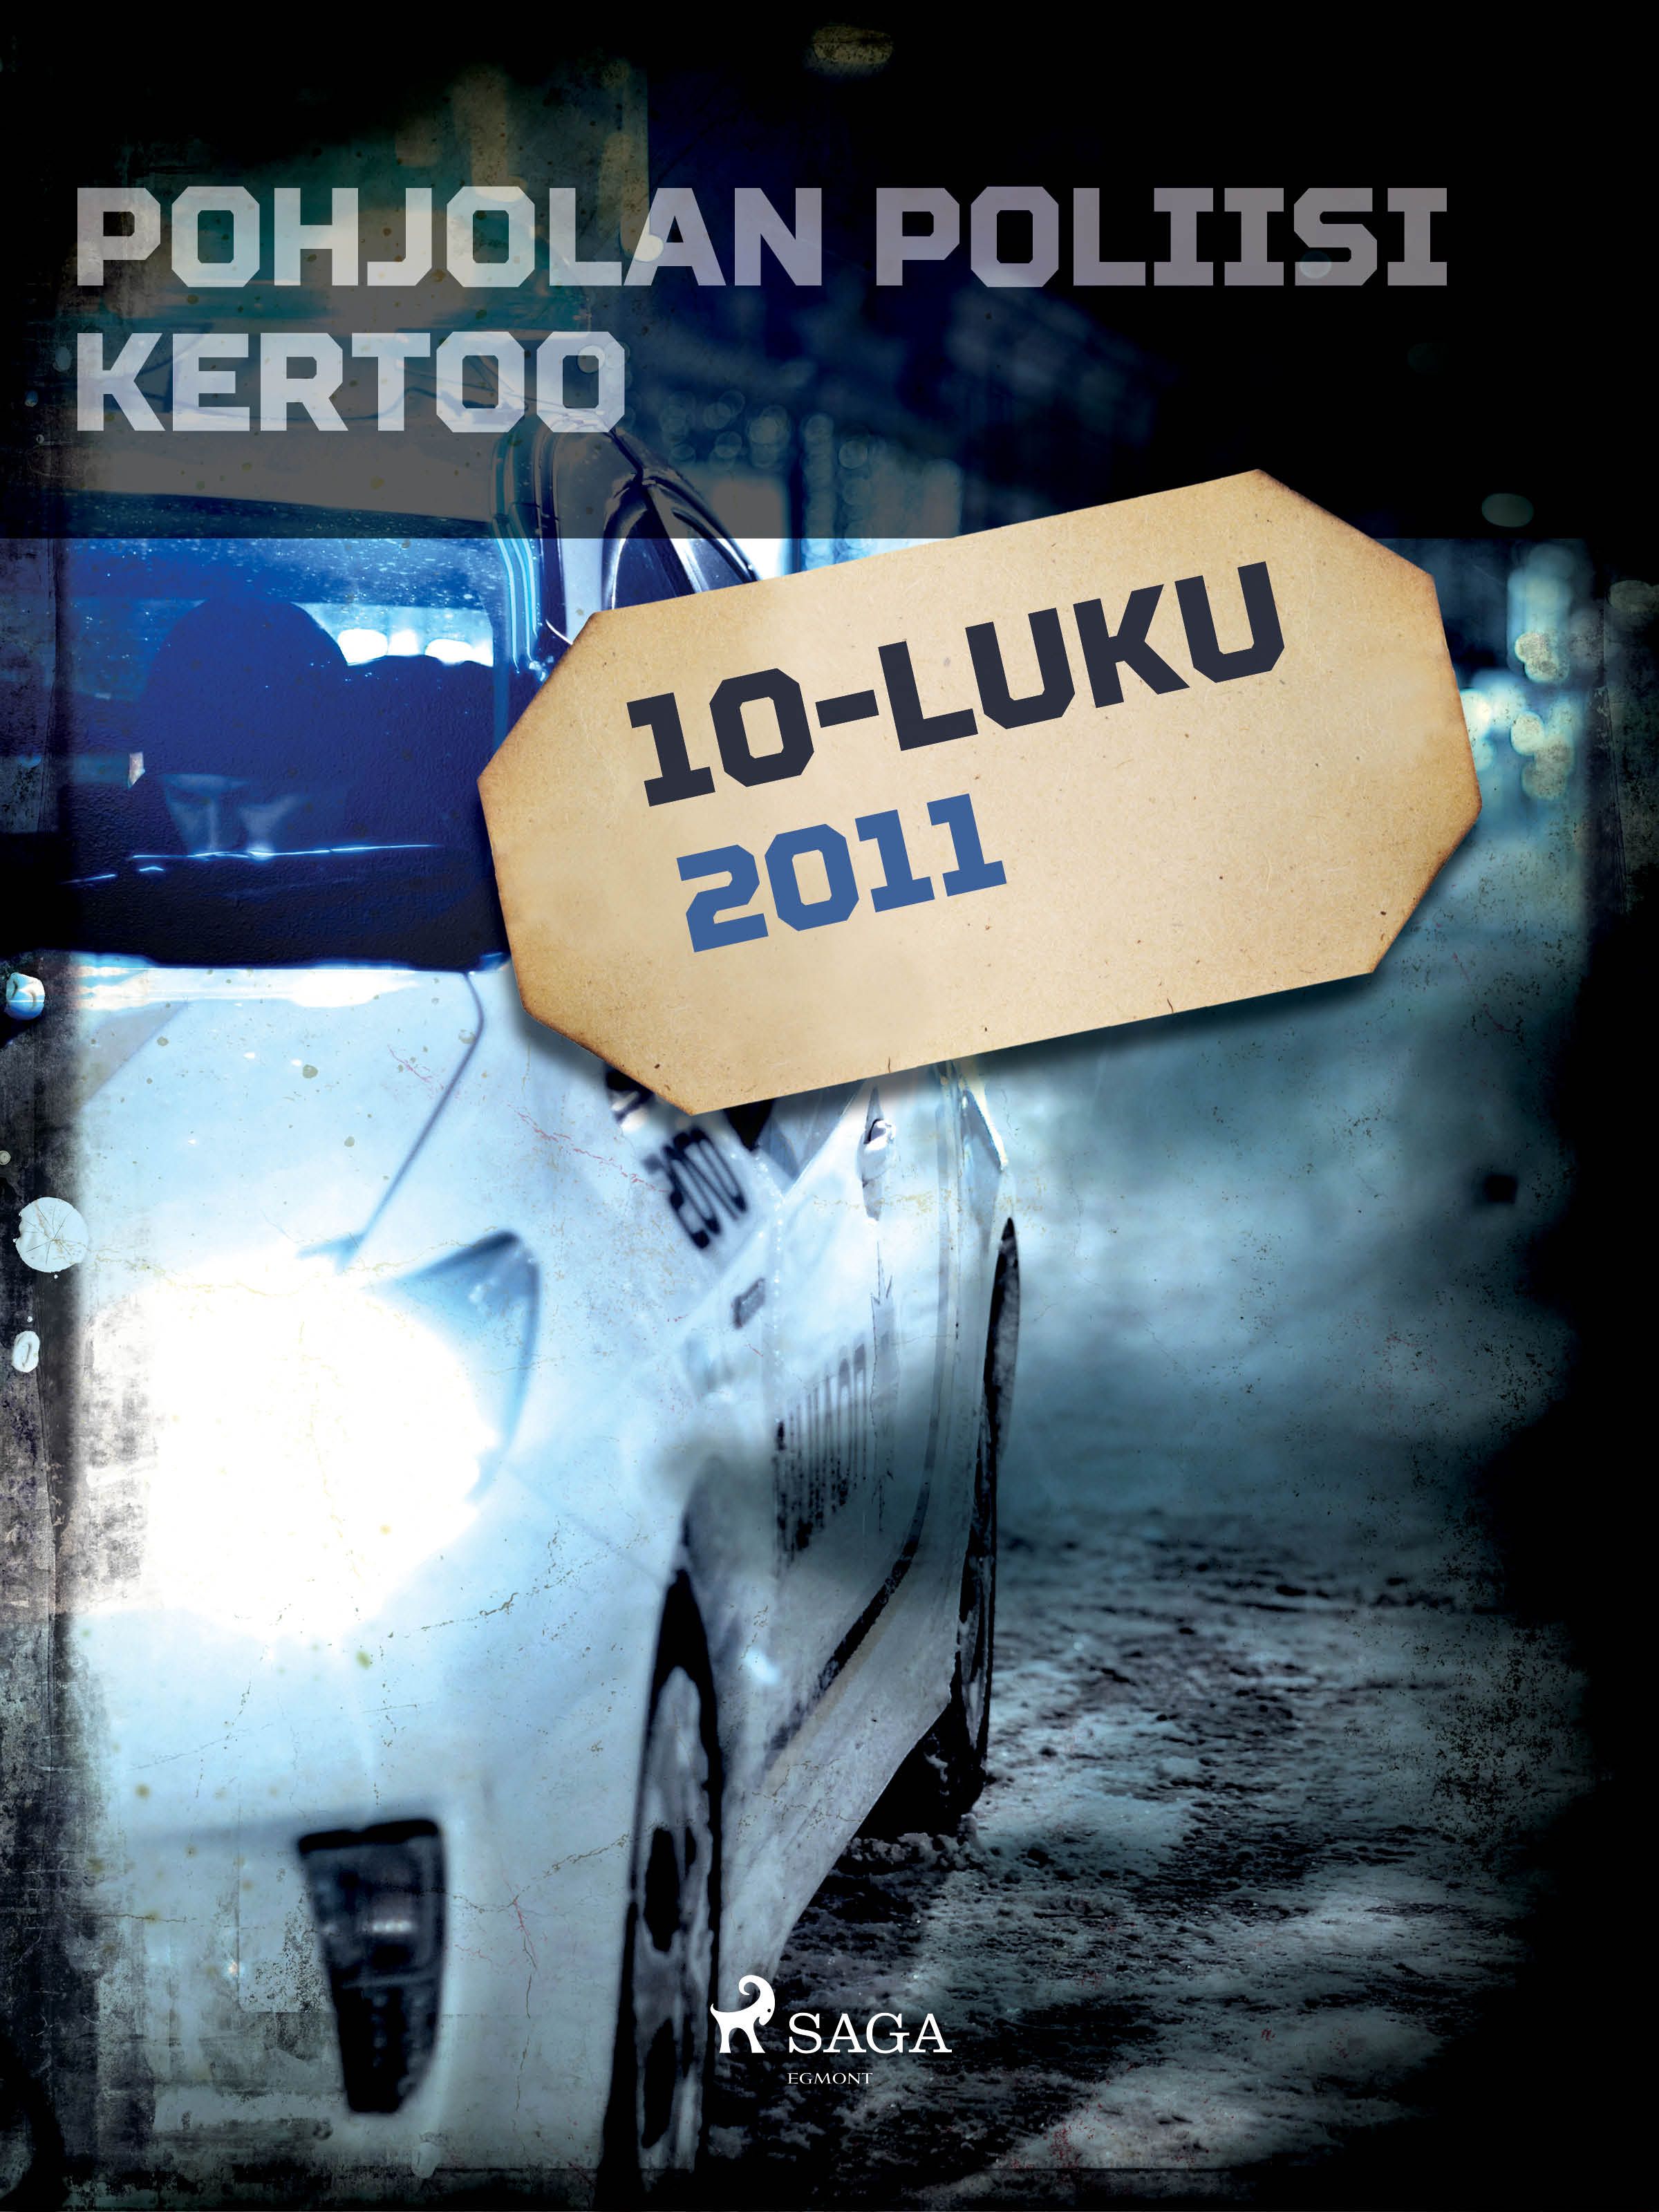 Pohjolan poliisi kertoo 2011, e-bog af Eri Tekijöitä